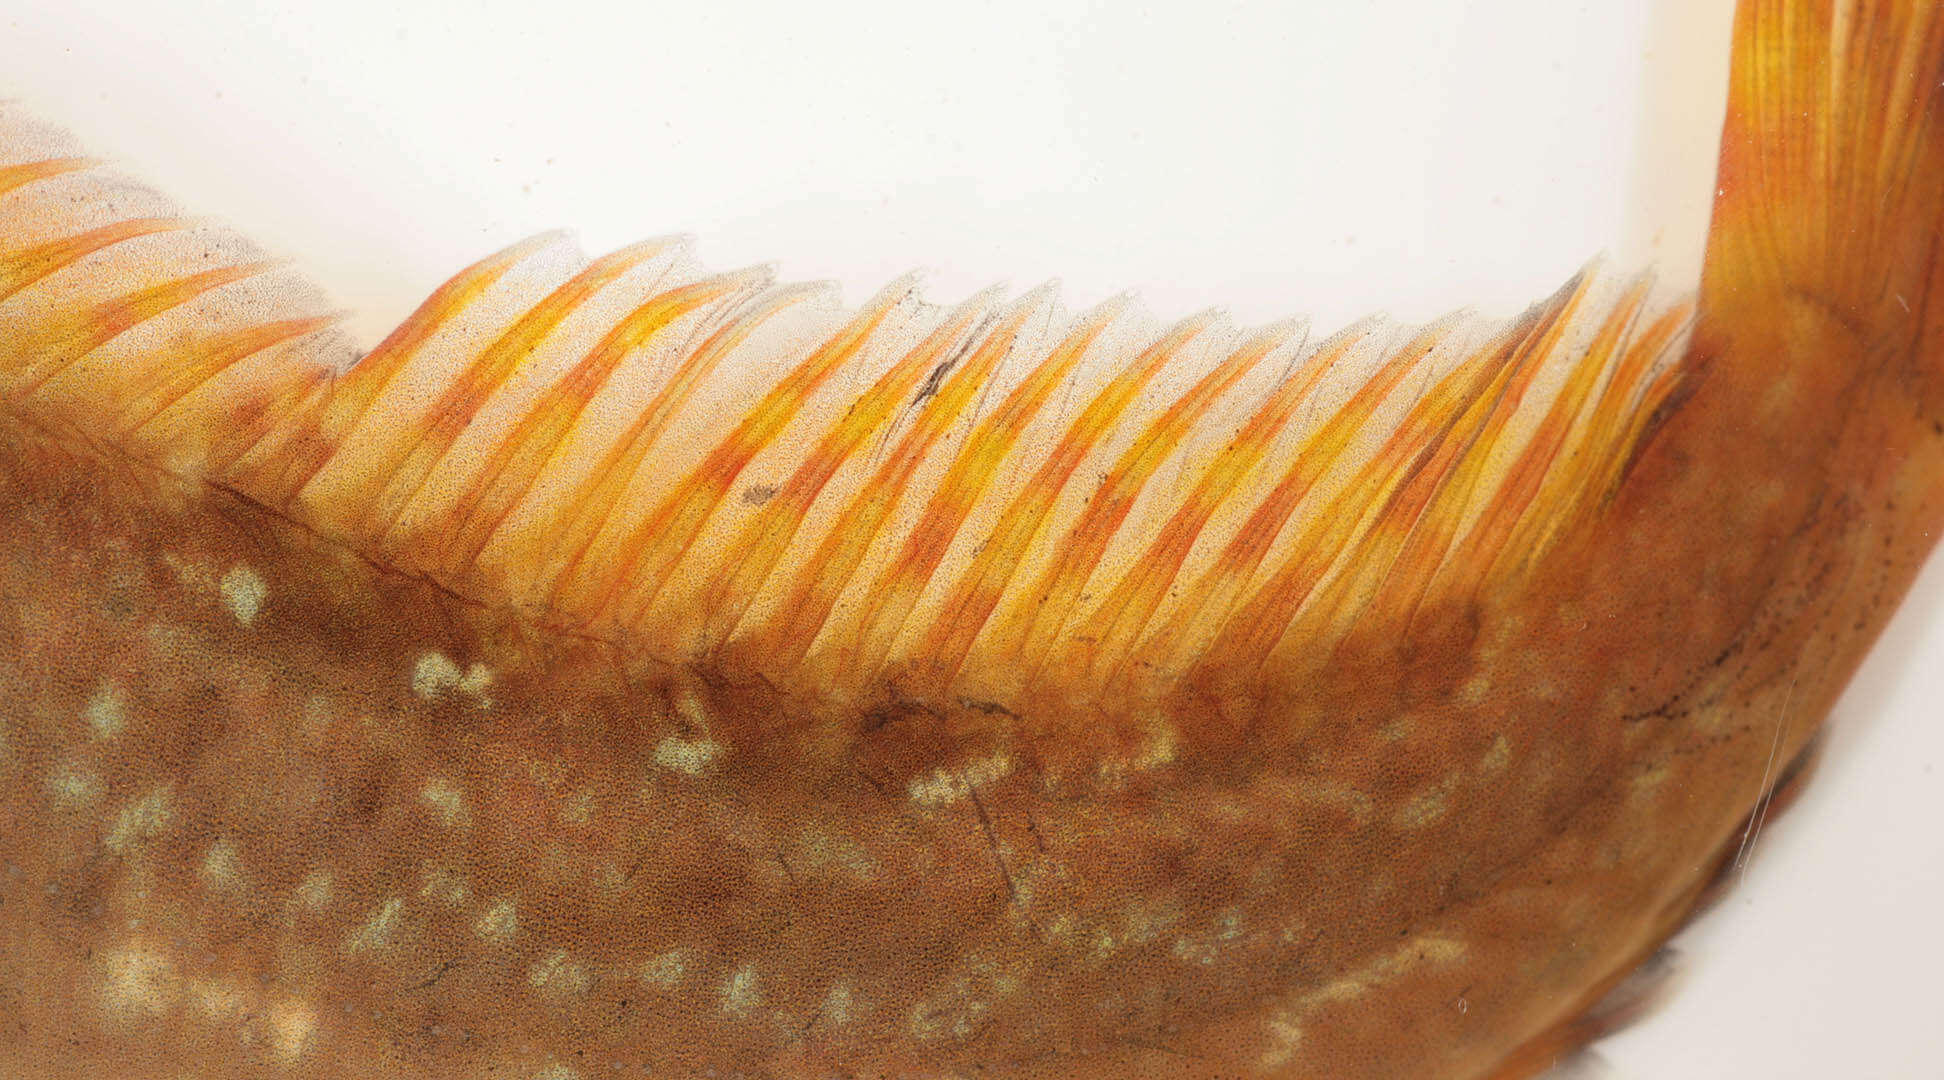 Image of Lipophrys